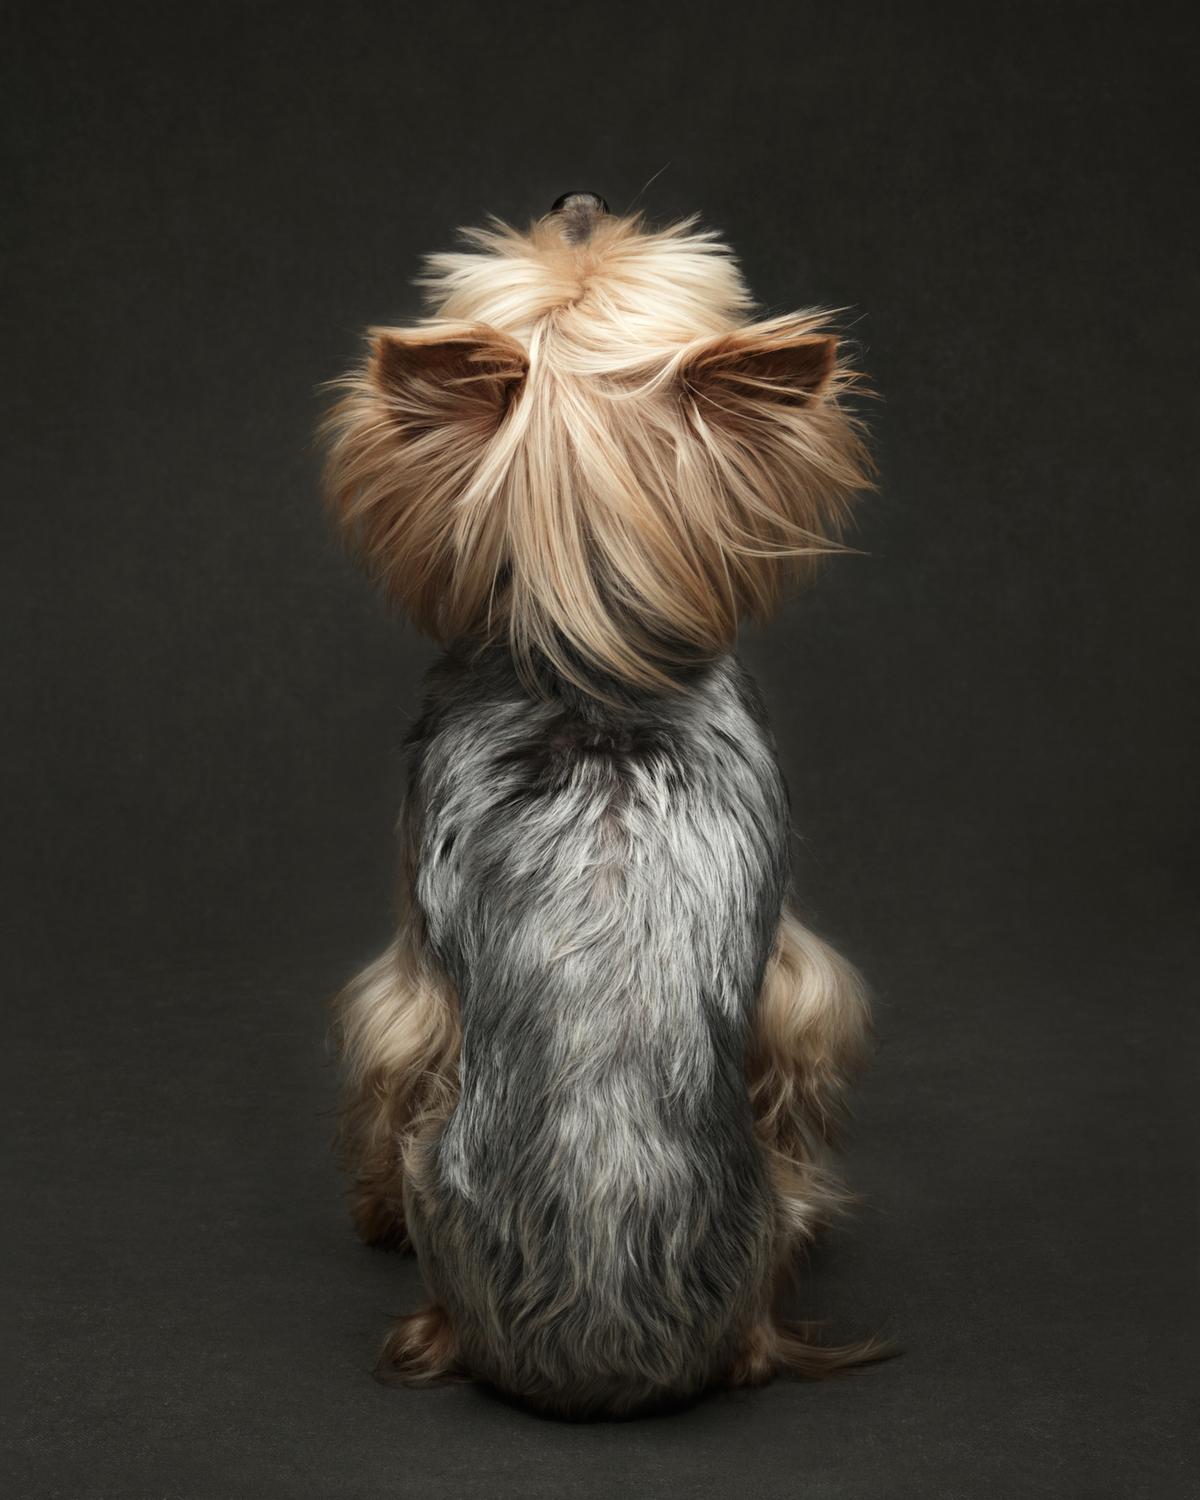 "Mimi's Backstory" by Jane Thomson, from Canada. (Courtesy of Jane Thomson via <a href="https://www.dogphotographyawards.com/winners-2022/">Dog Photography Awards</a>)